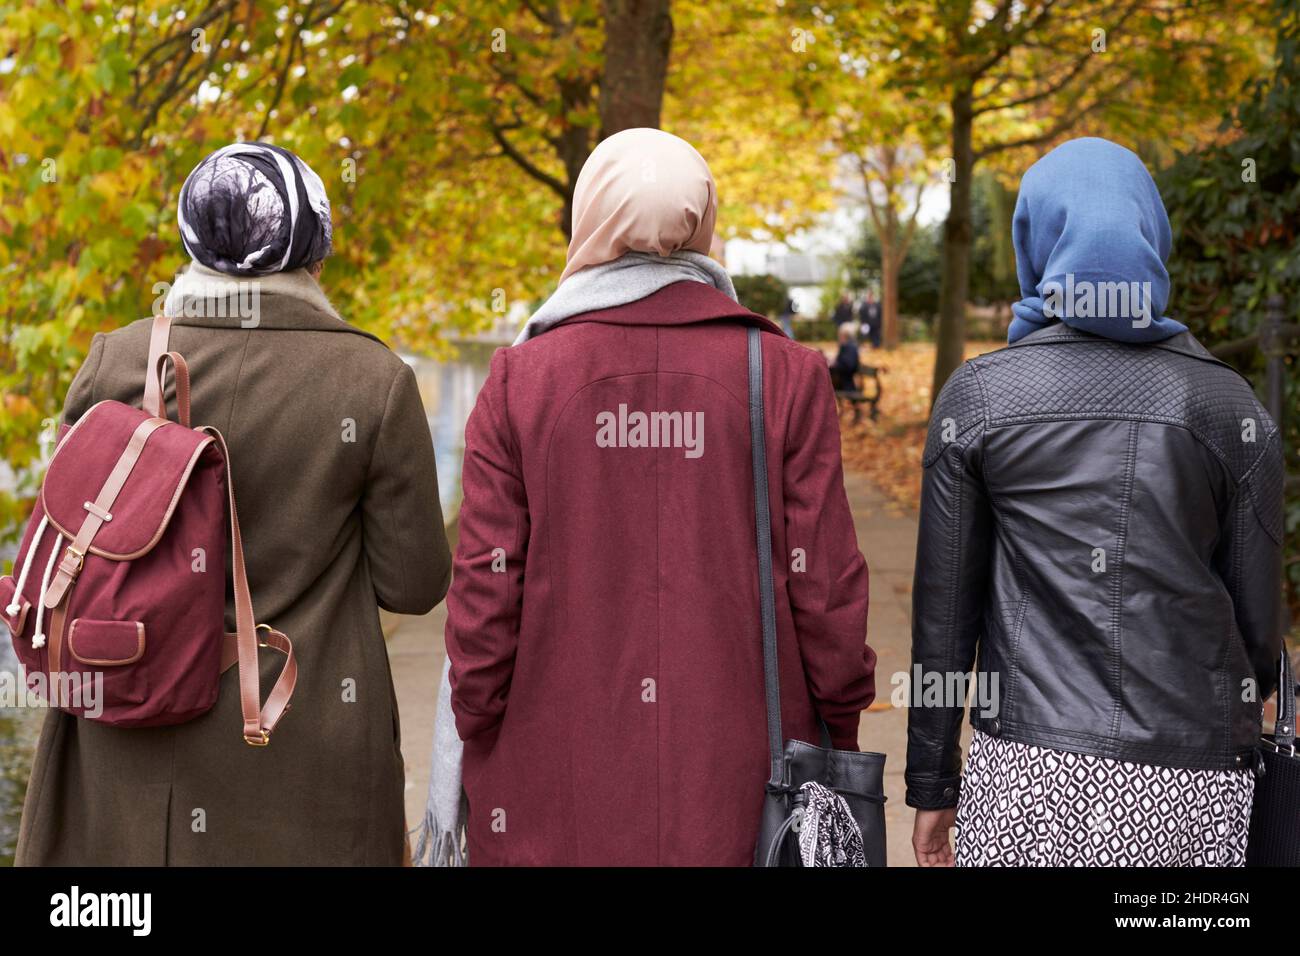 urban, headscarf, muslim, hijab, urbans, headscarfs, muslims, hijabs Stock Photo